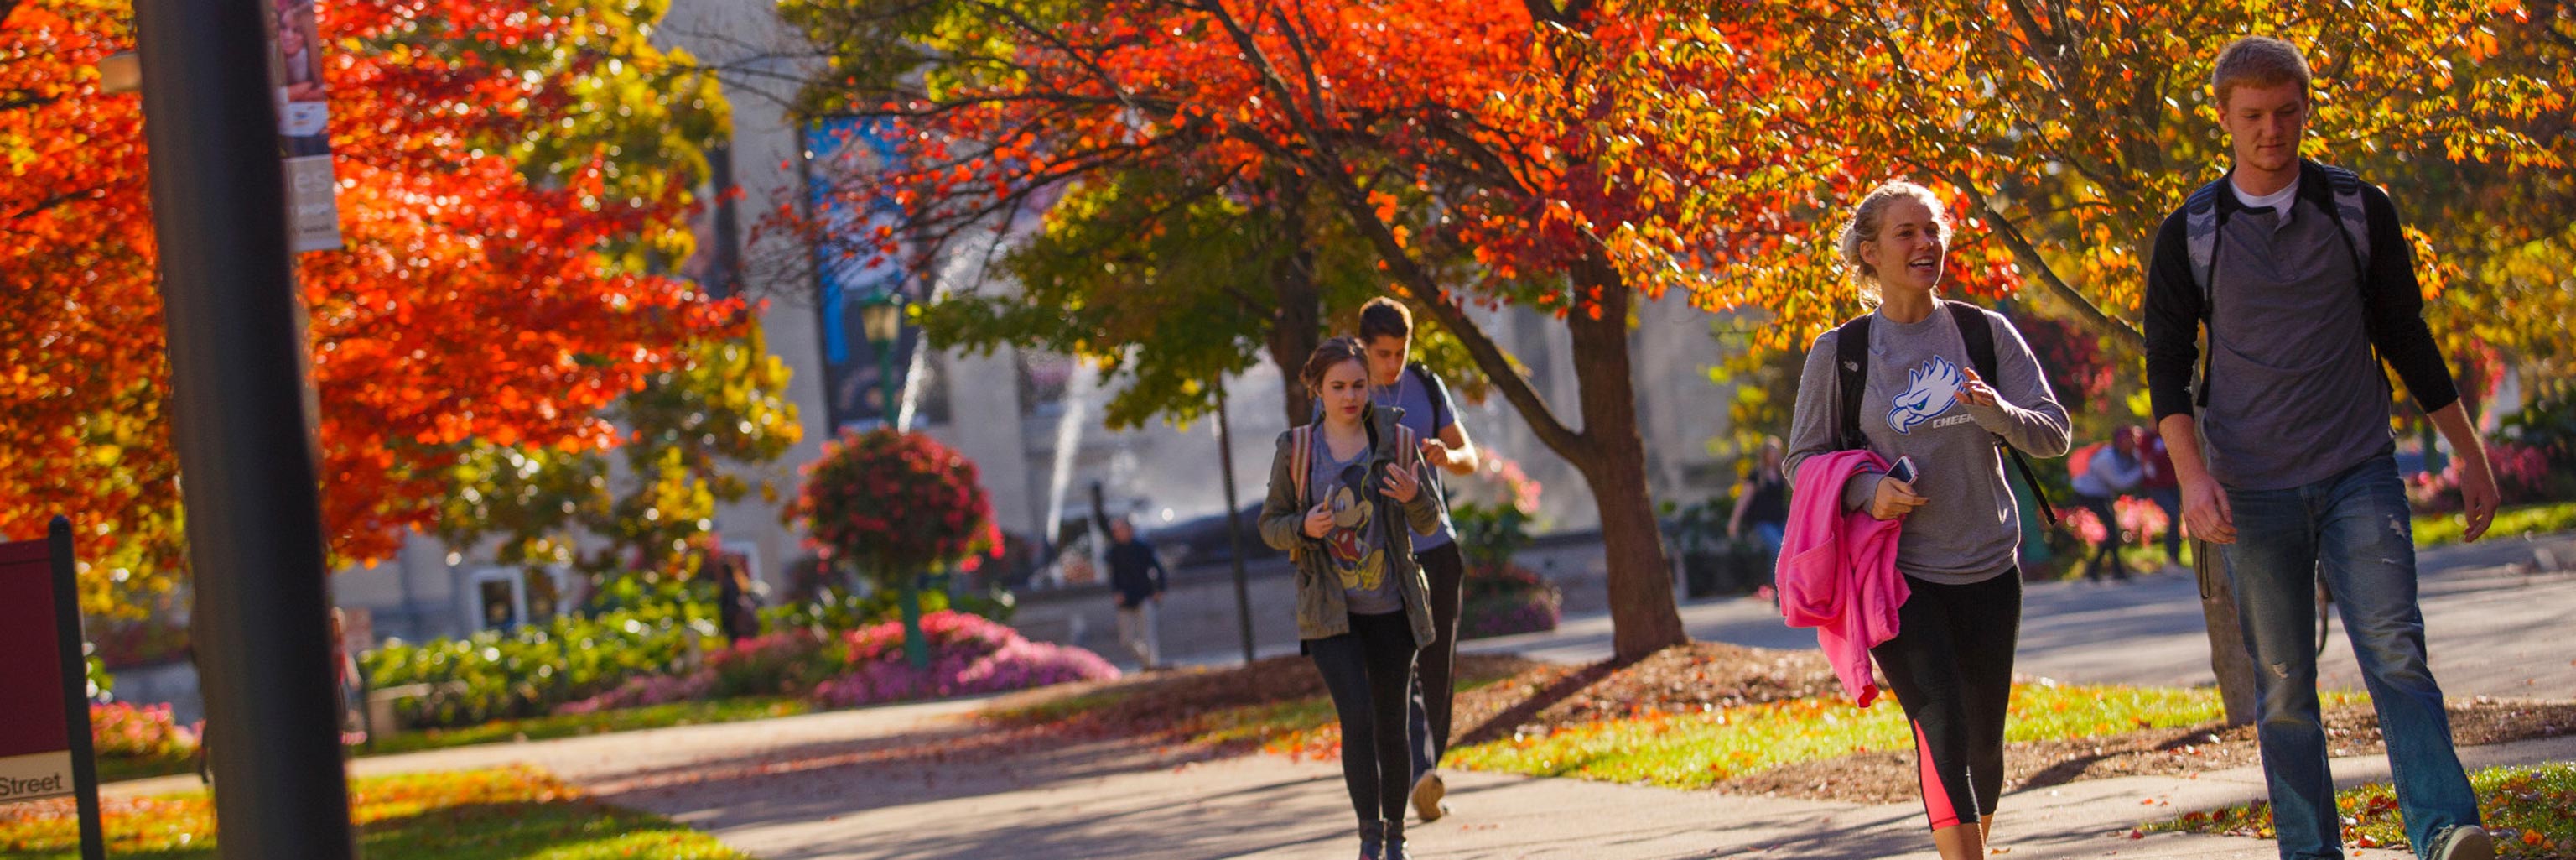 students walking down sidewalk on campus